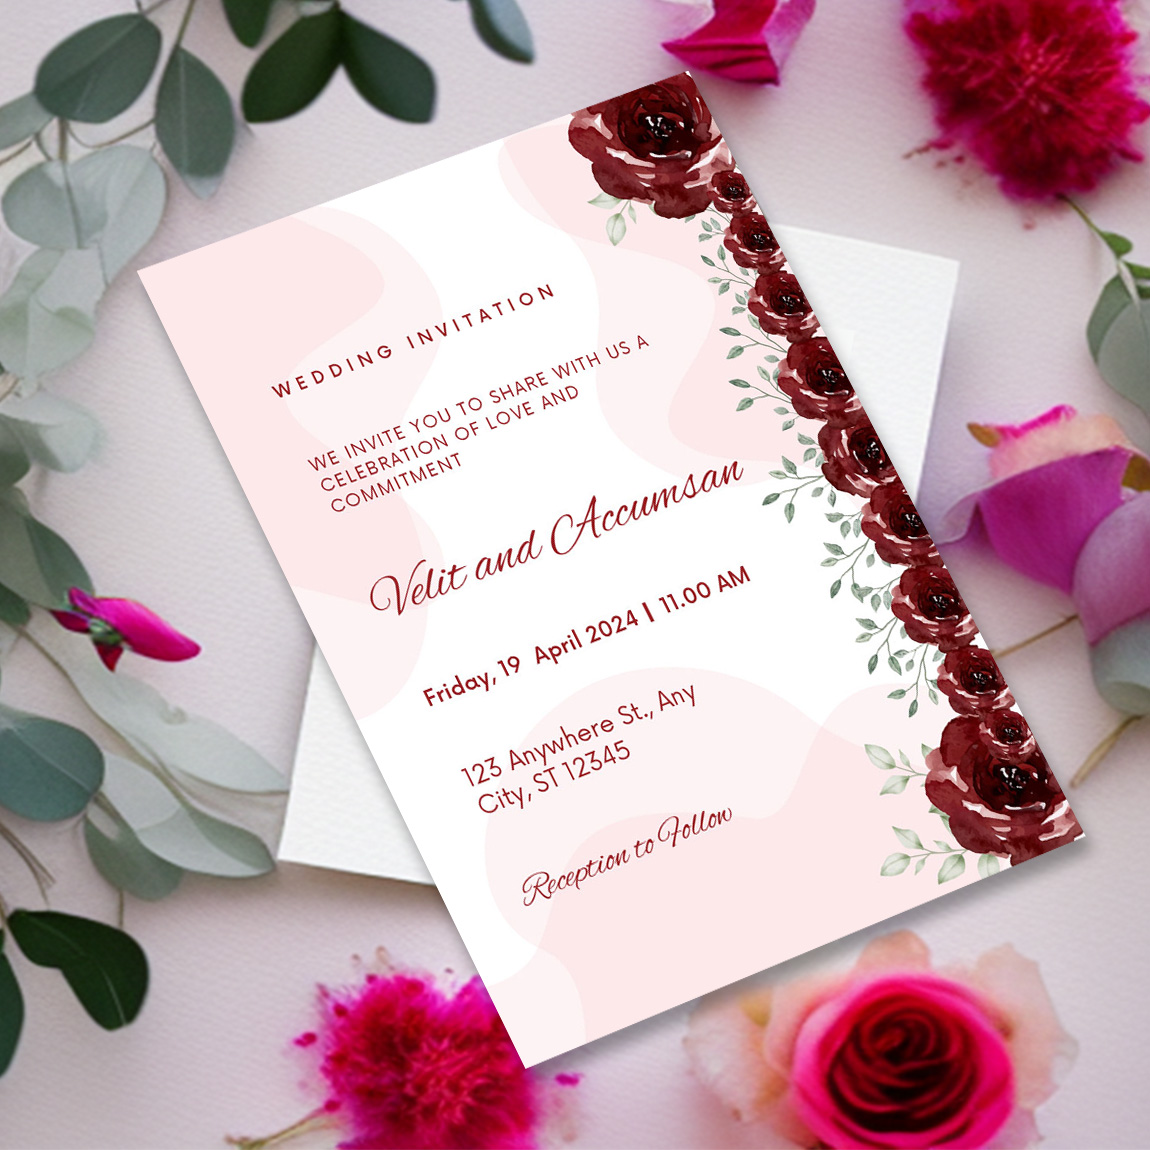 Image of amazing wedding invitation with traditional design.